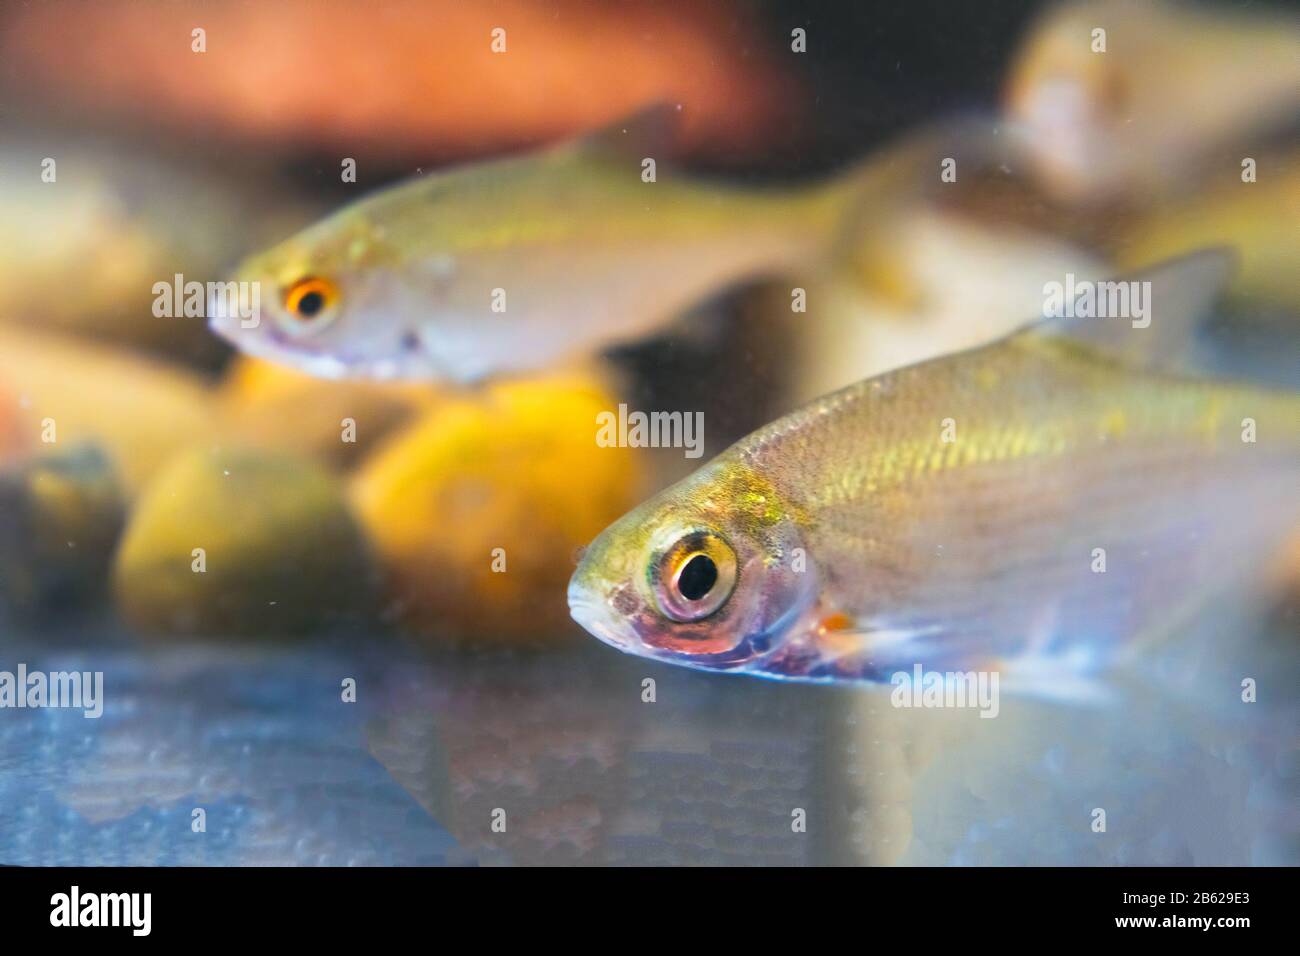 Young bream swims in the aquarium. Freshwater river fish in an aquarium. Selective focus Stock Photo